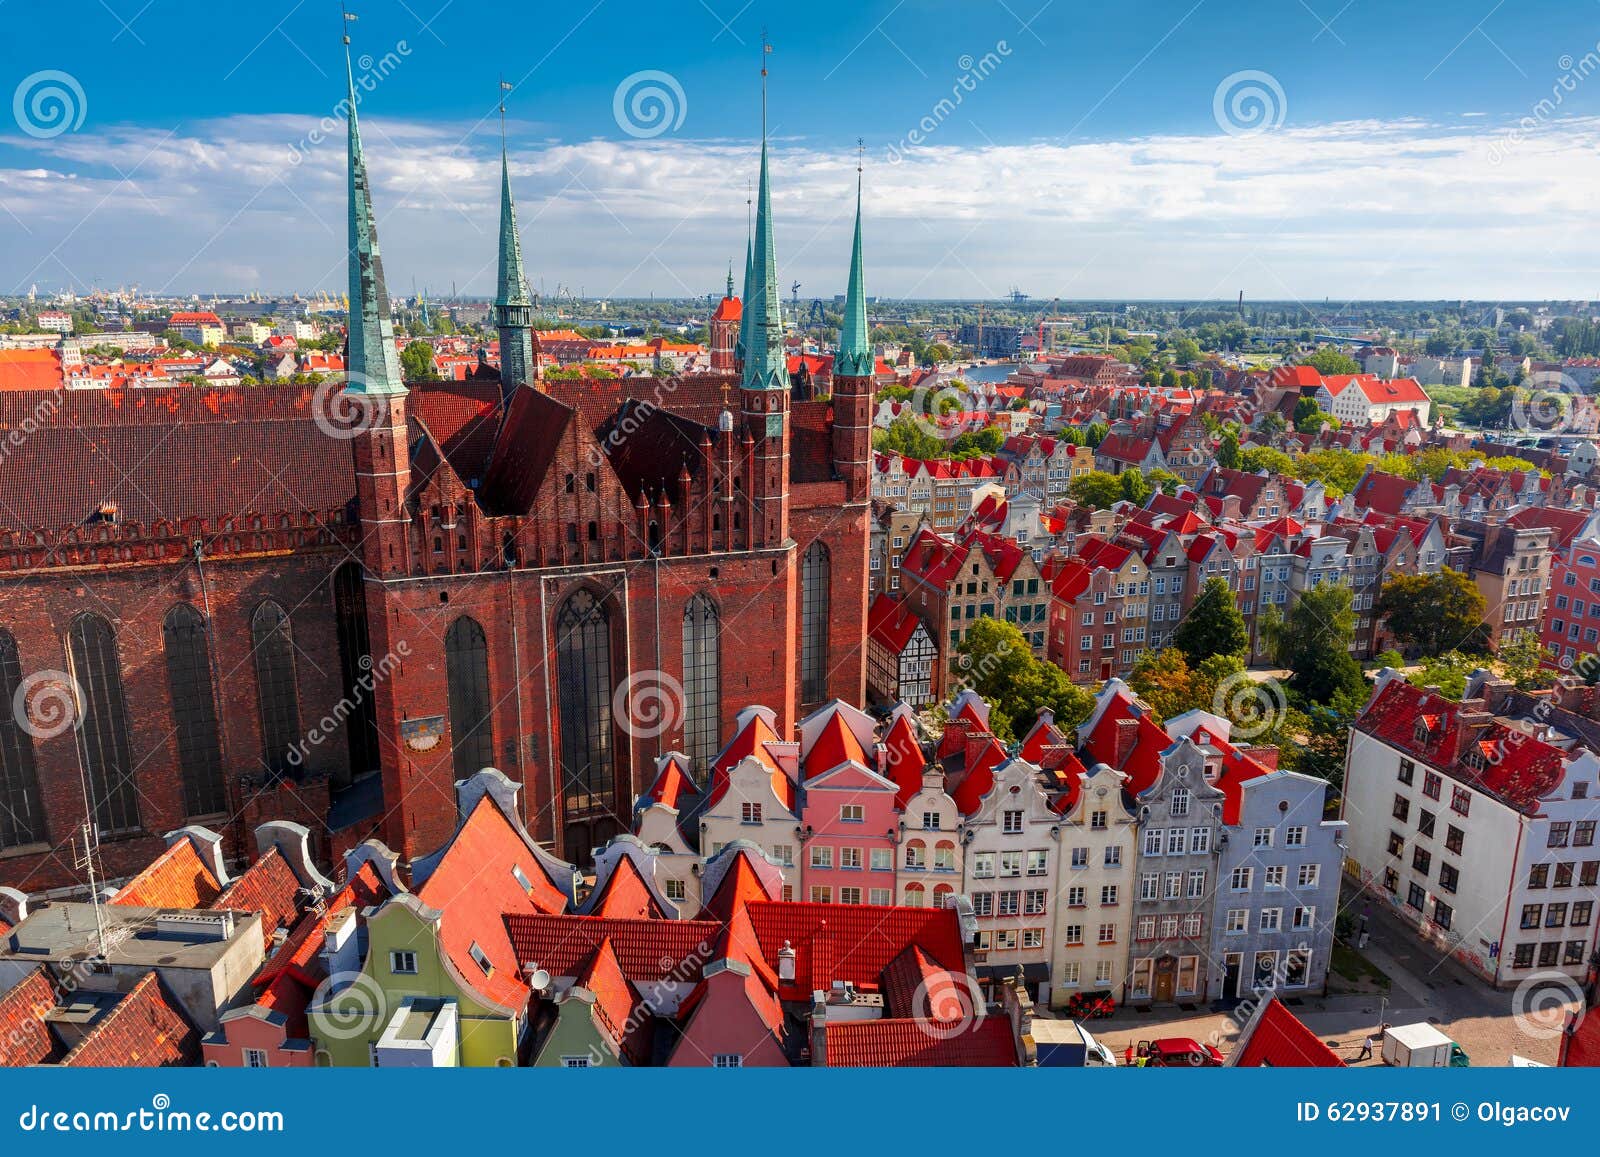 st mary church in gdansk, poland